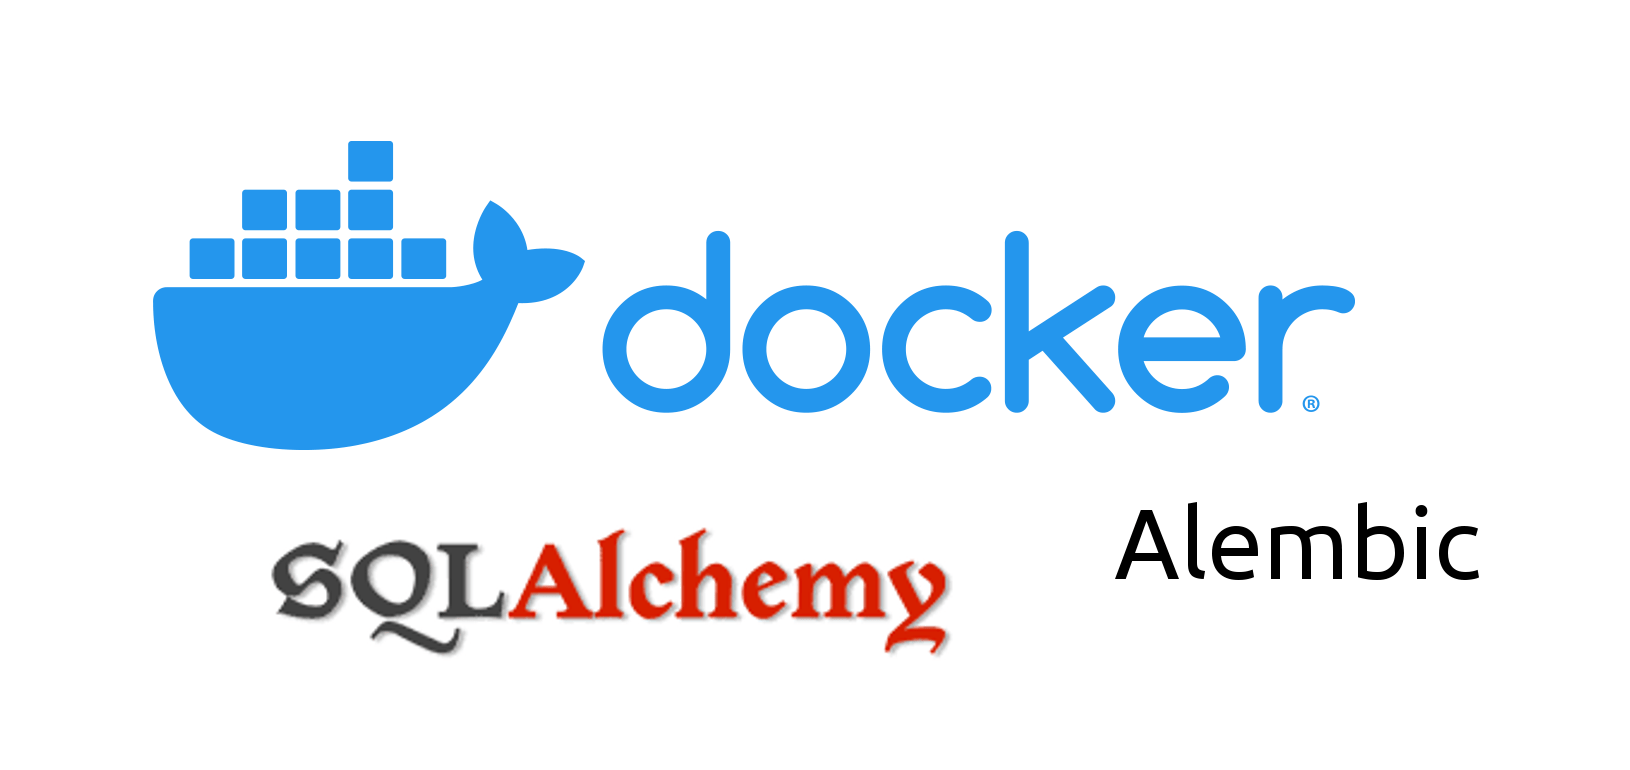 Migration of a dockerized MySQL database with SQLAlchemy and Alembic